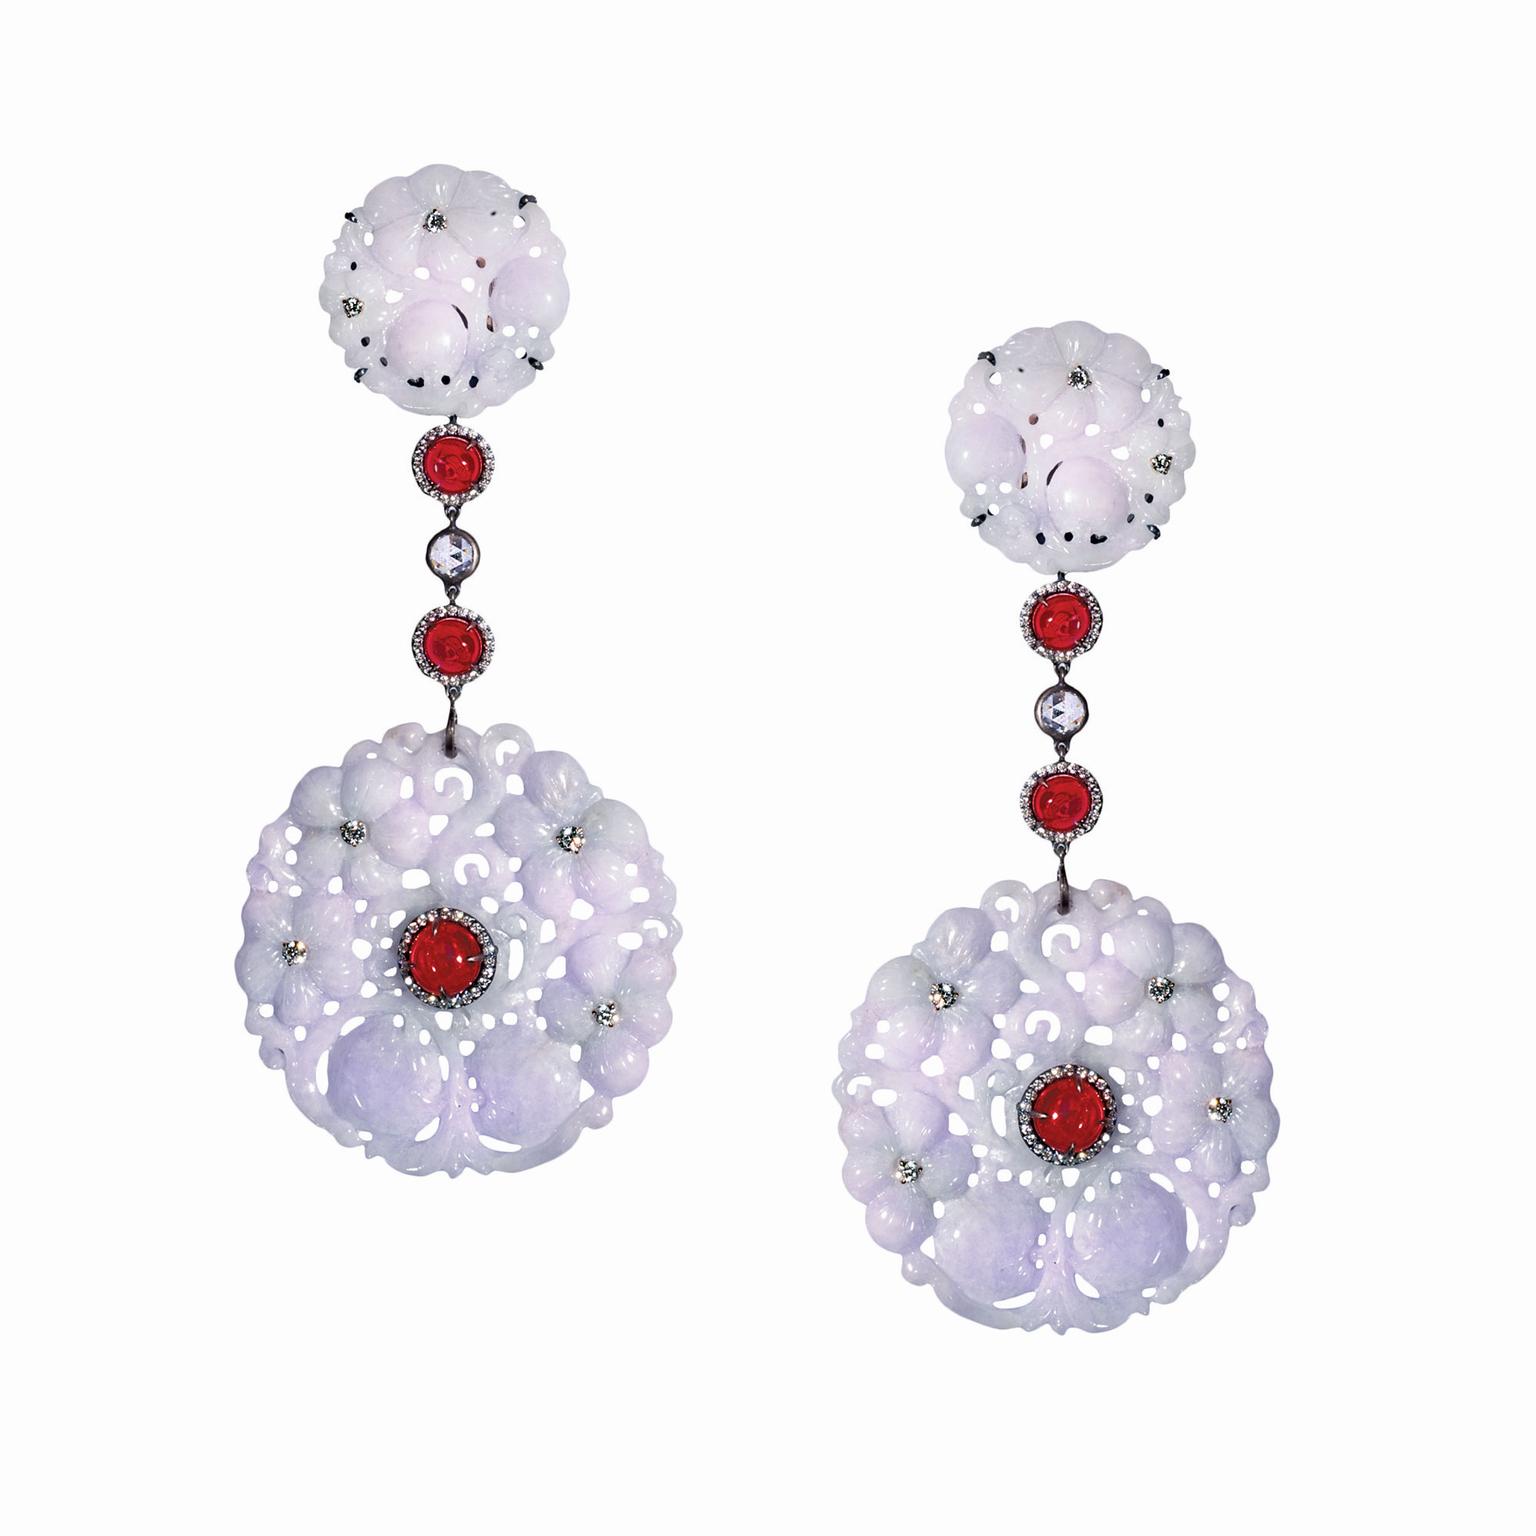 Suzanne Syz Empress Garden coloured jade earrings